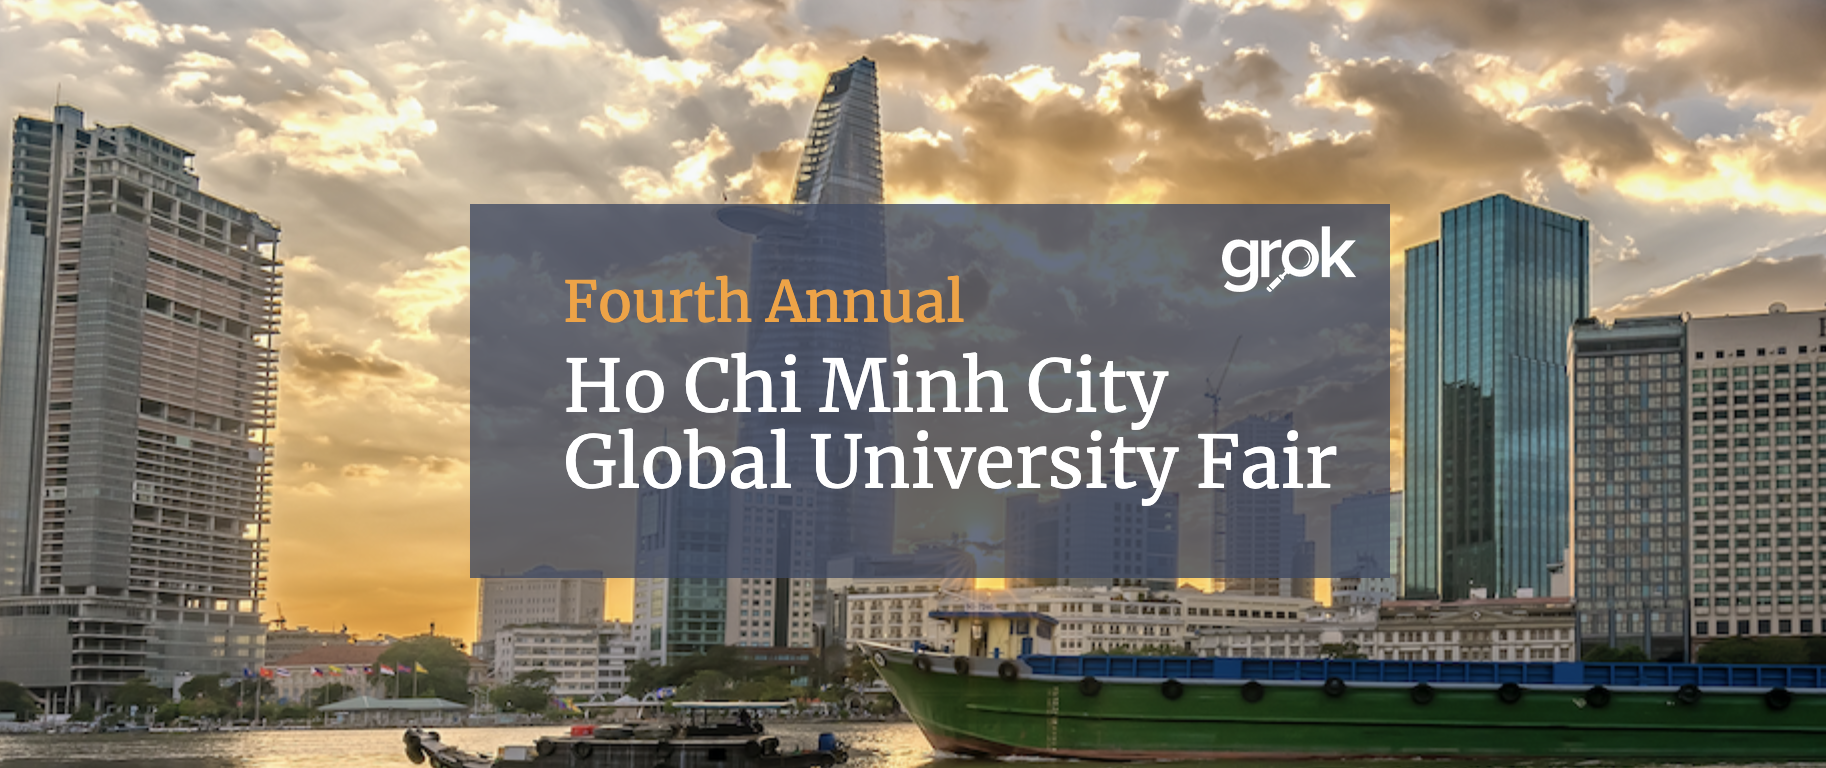 Fourth Annual Ho Chi Minh City Global University Fair